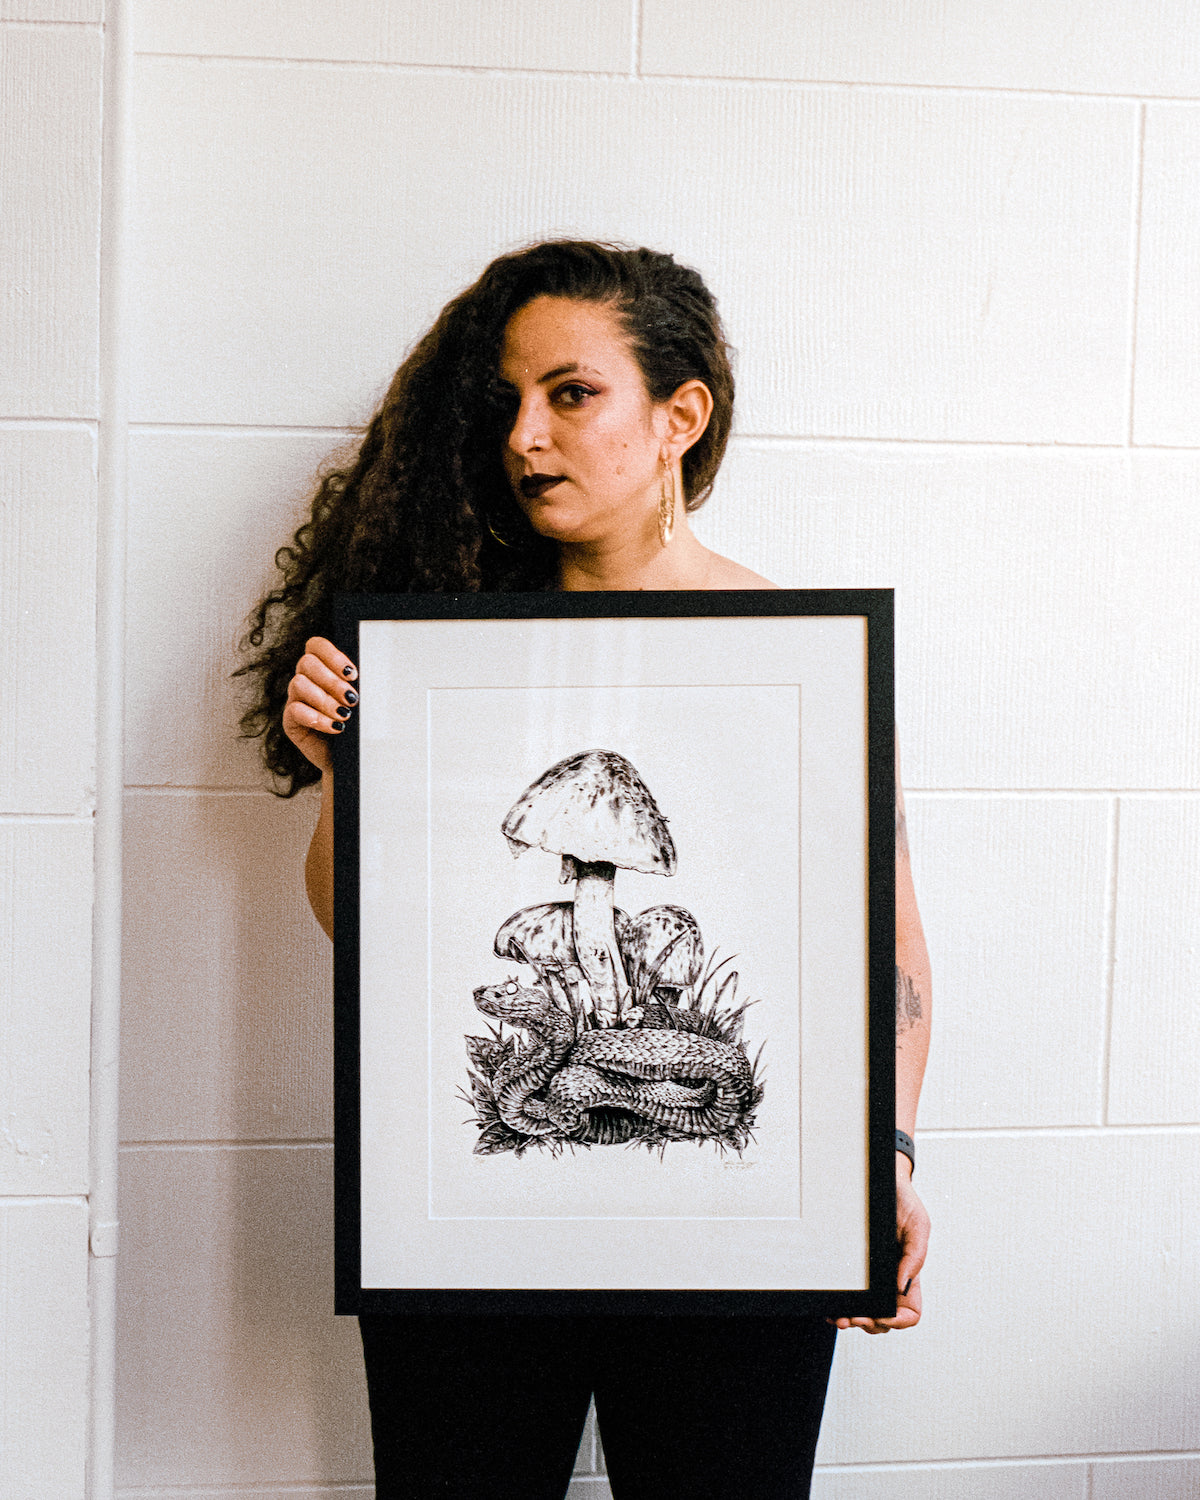 A portrait shot on grainy film of the artist, Pepper Raccoon, holding a large framed ink artwork of an Eyelash Viper.